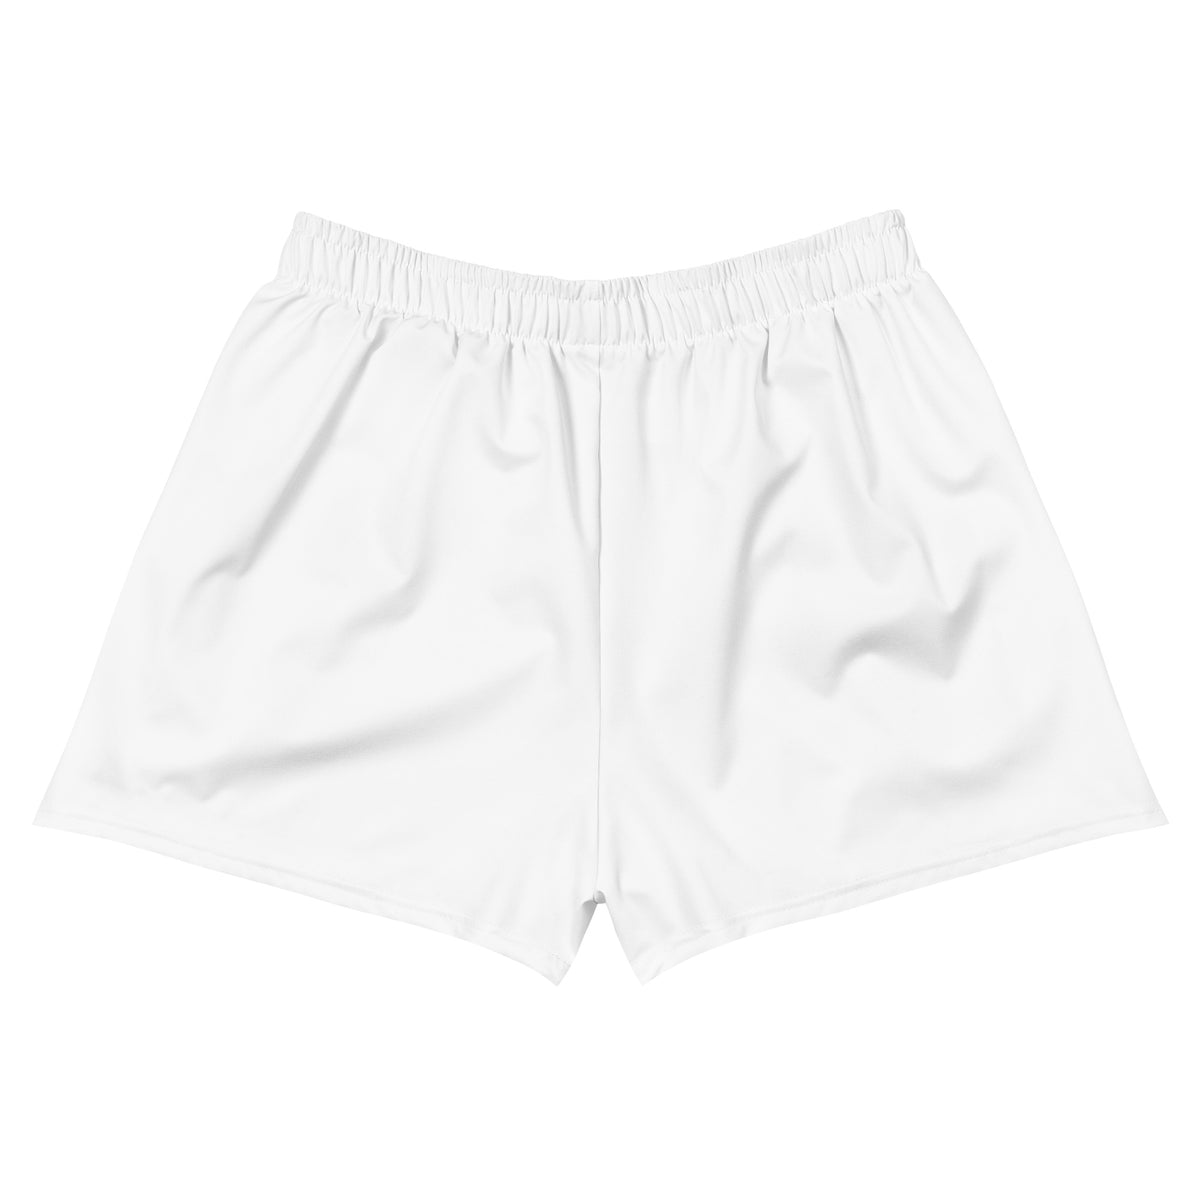 Eco Retro Vibe Women’s Recycled Athletic Shorts - Retro Vibe Collection - Area F Island Clothing